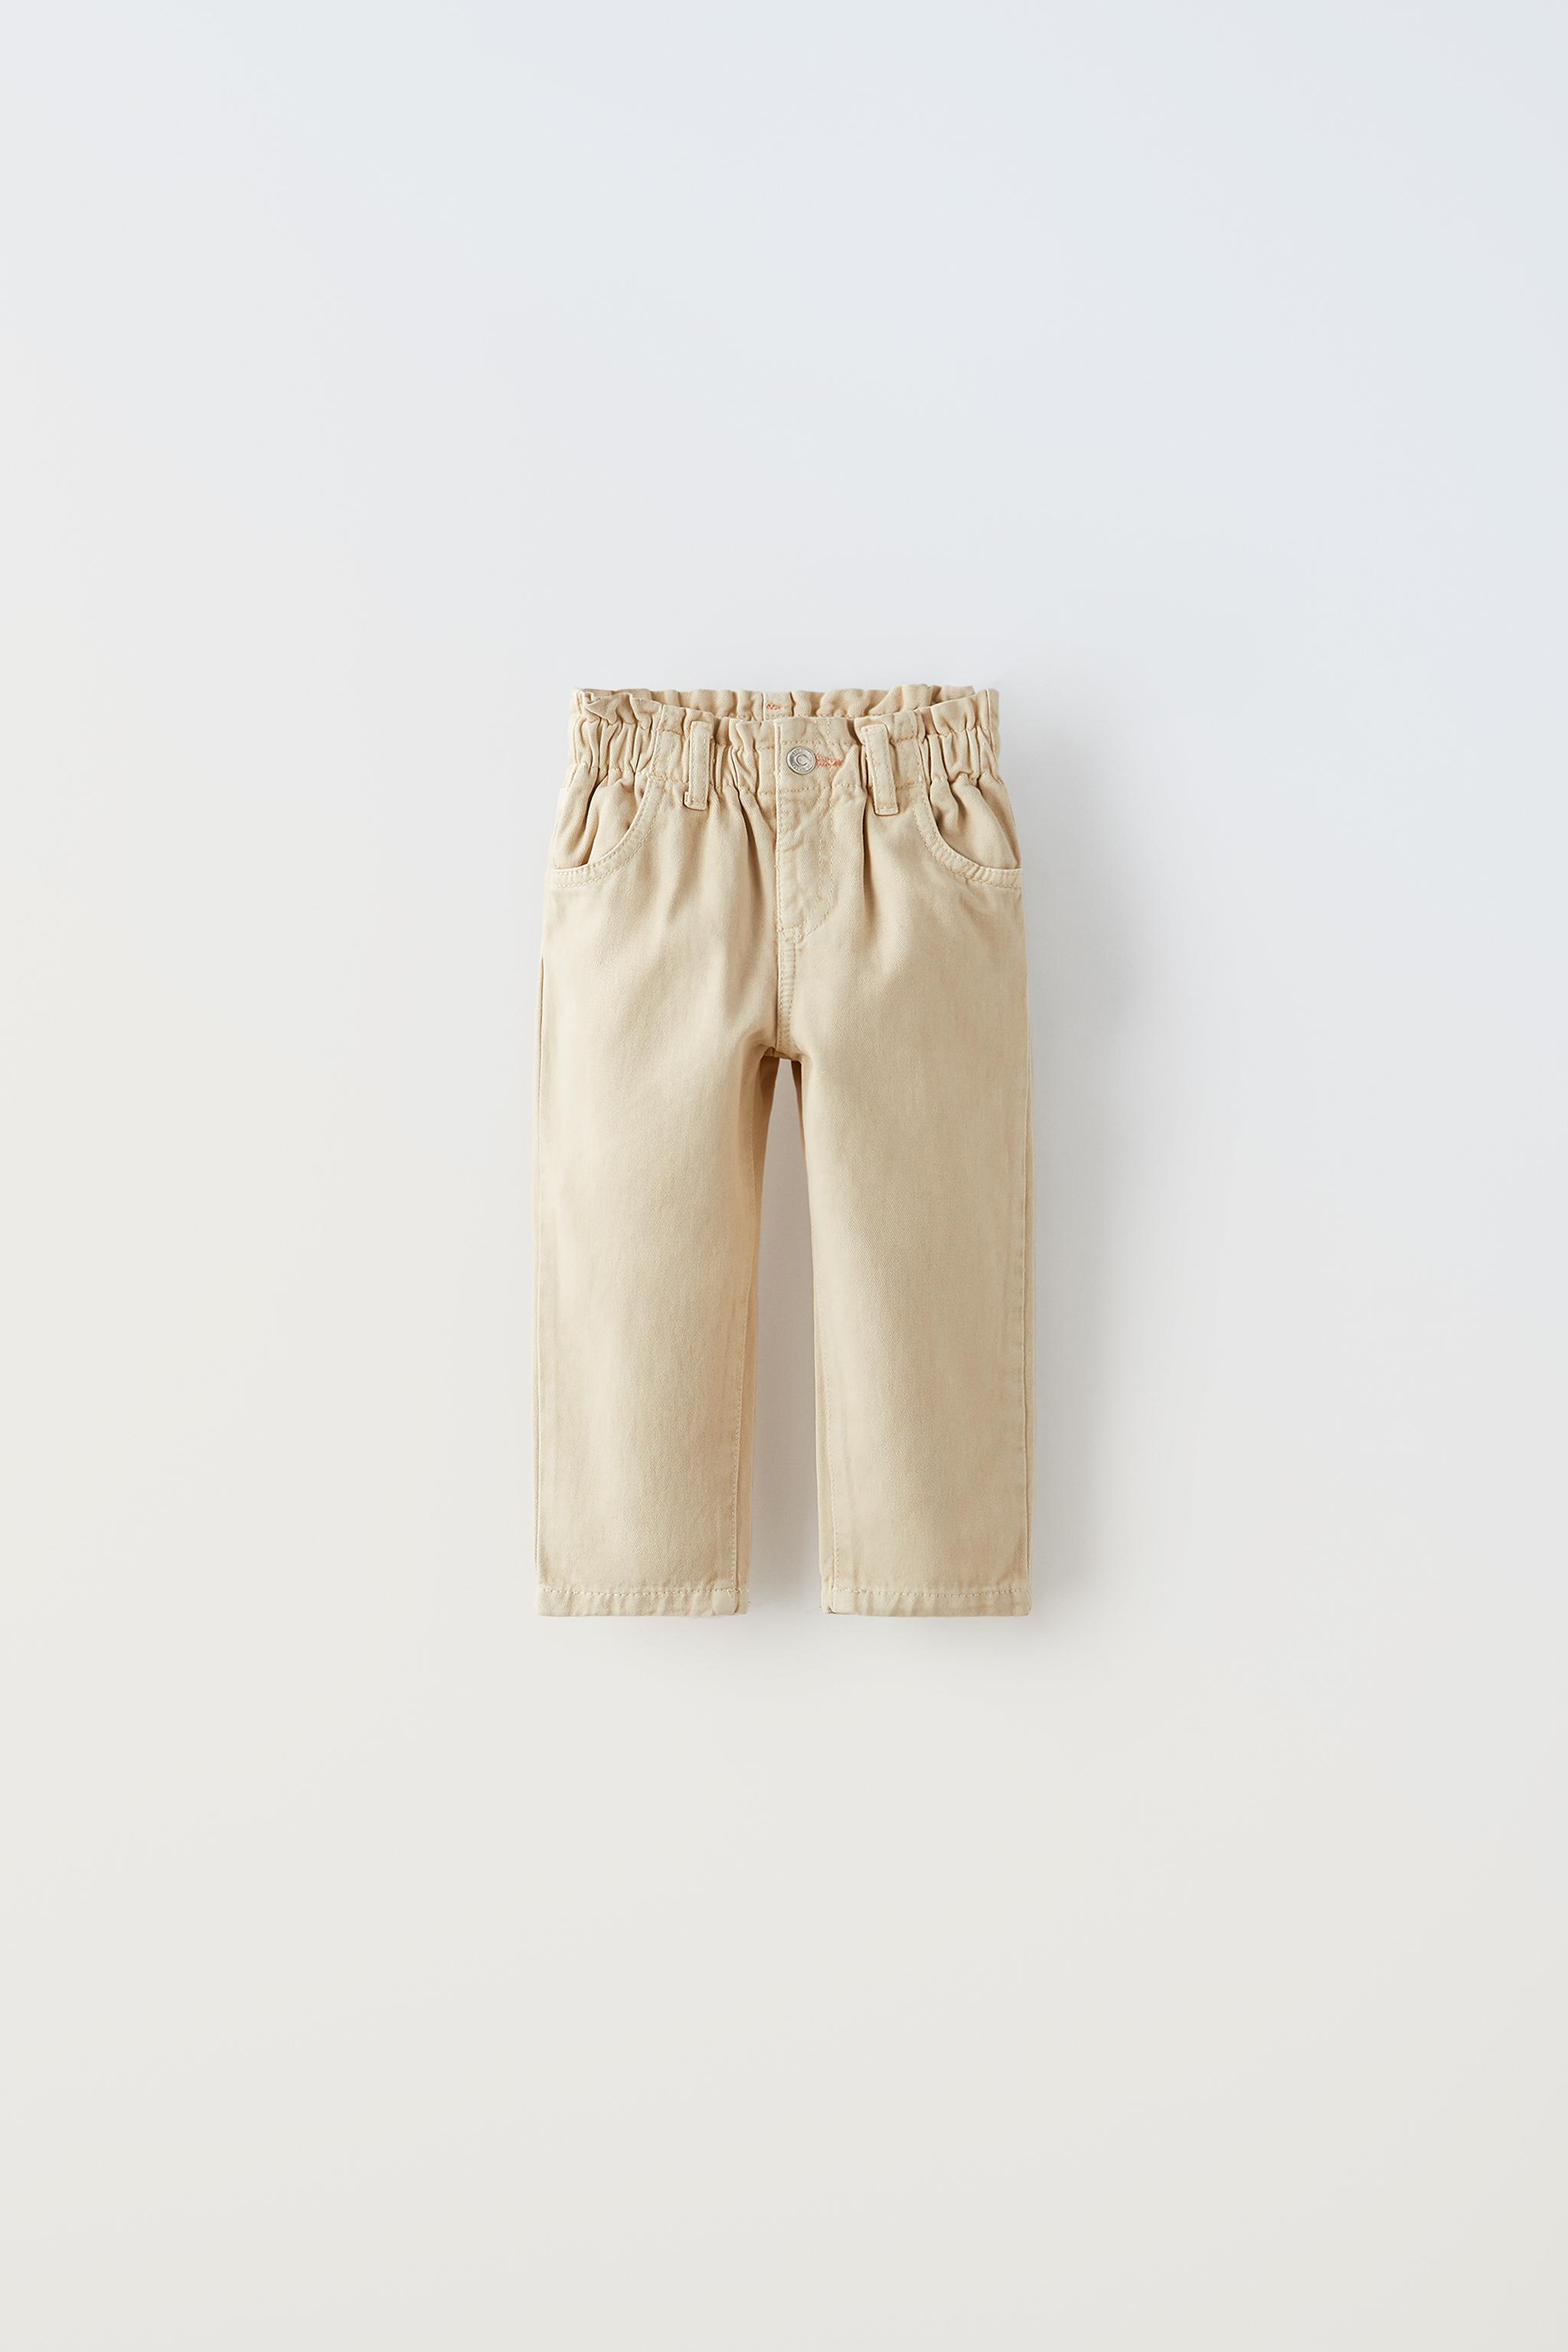 Zara Pants Size Small Soft tan joggers Paper bag - Depop